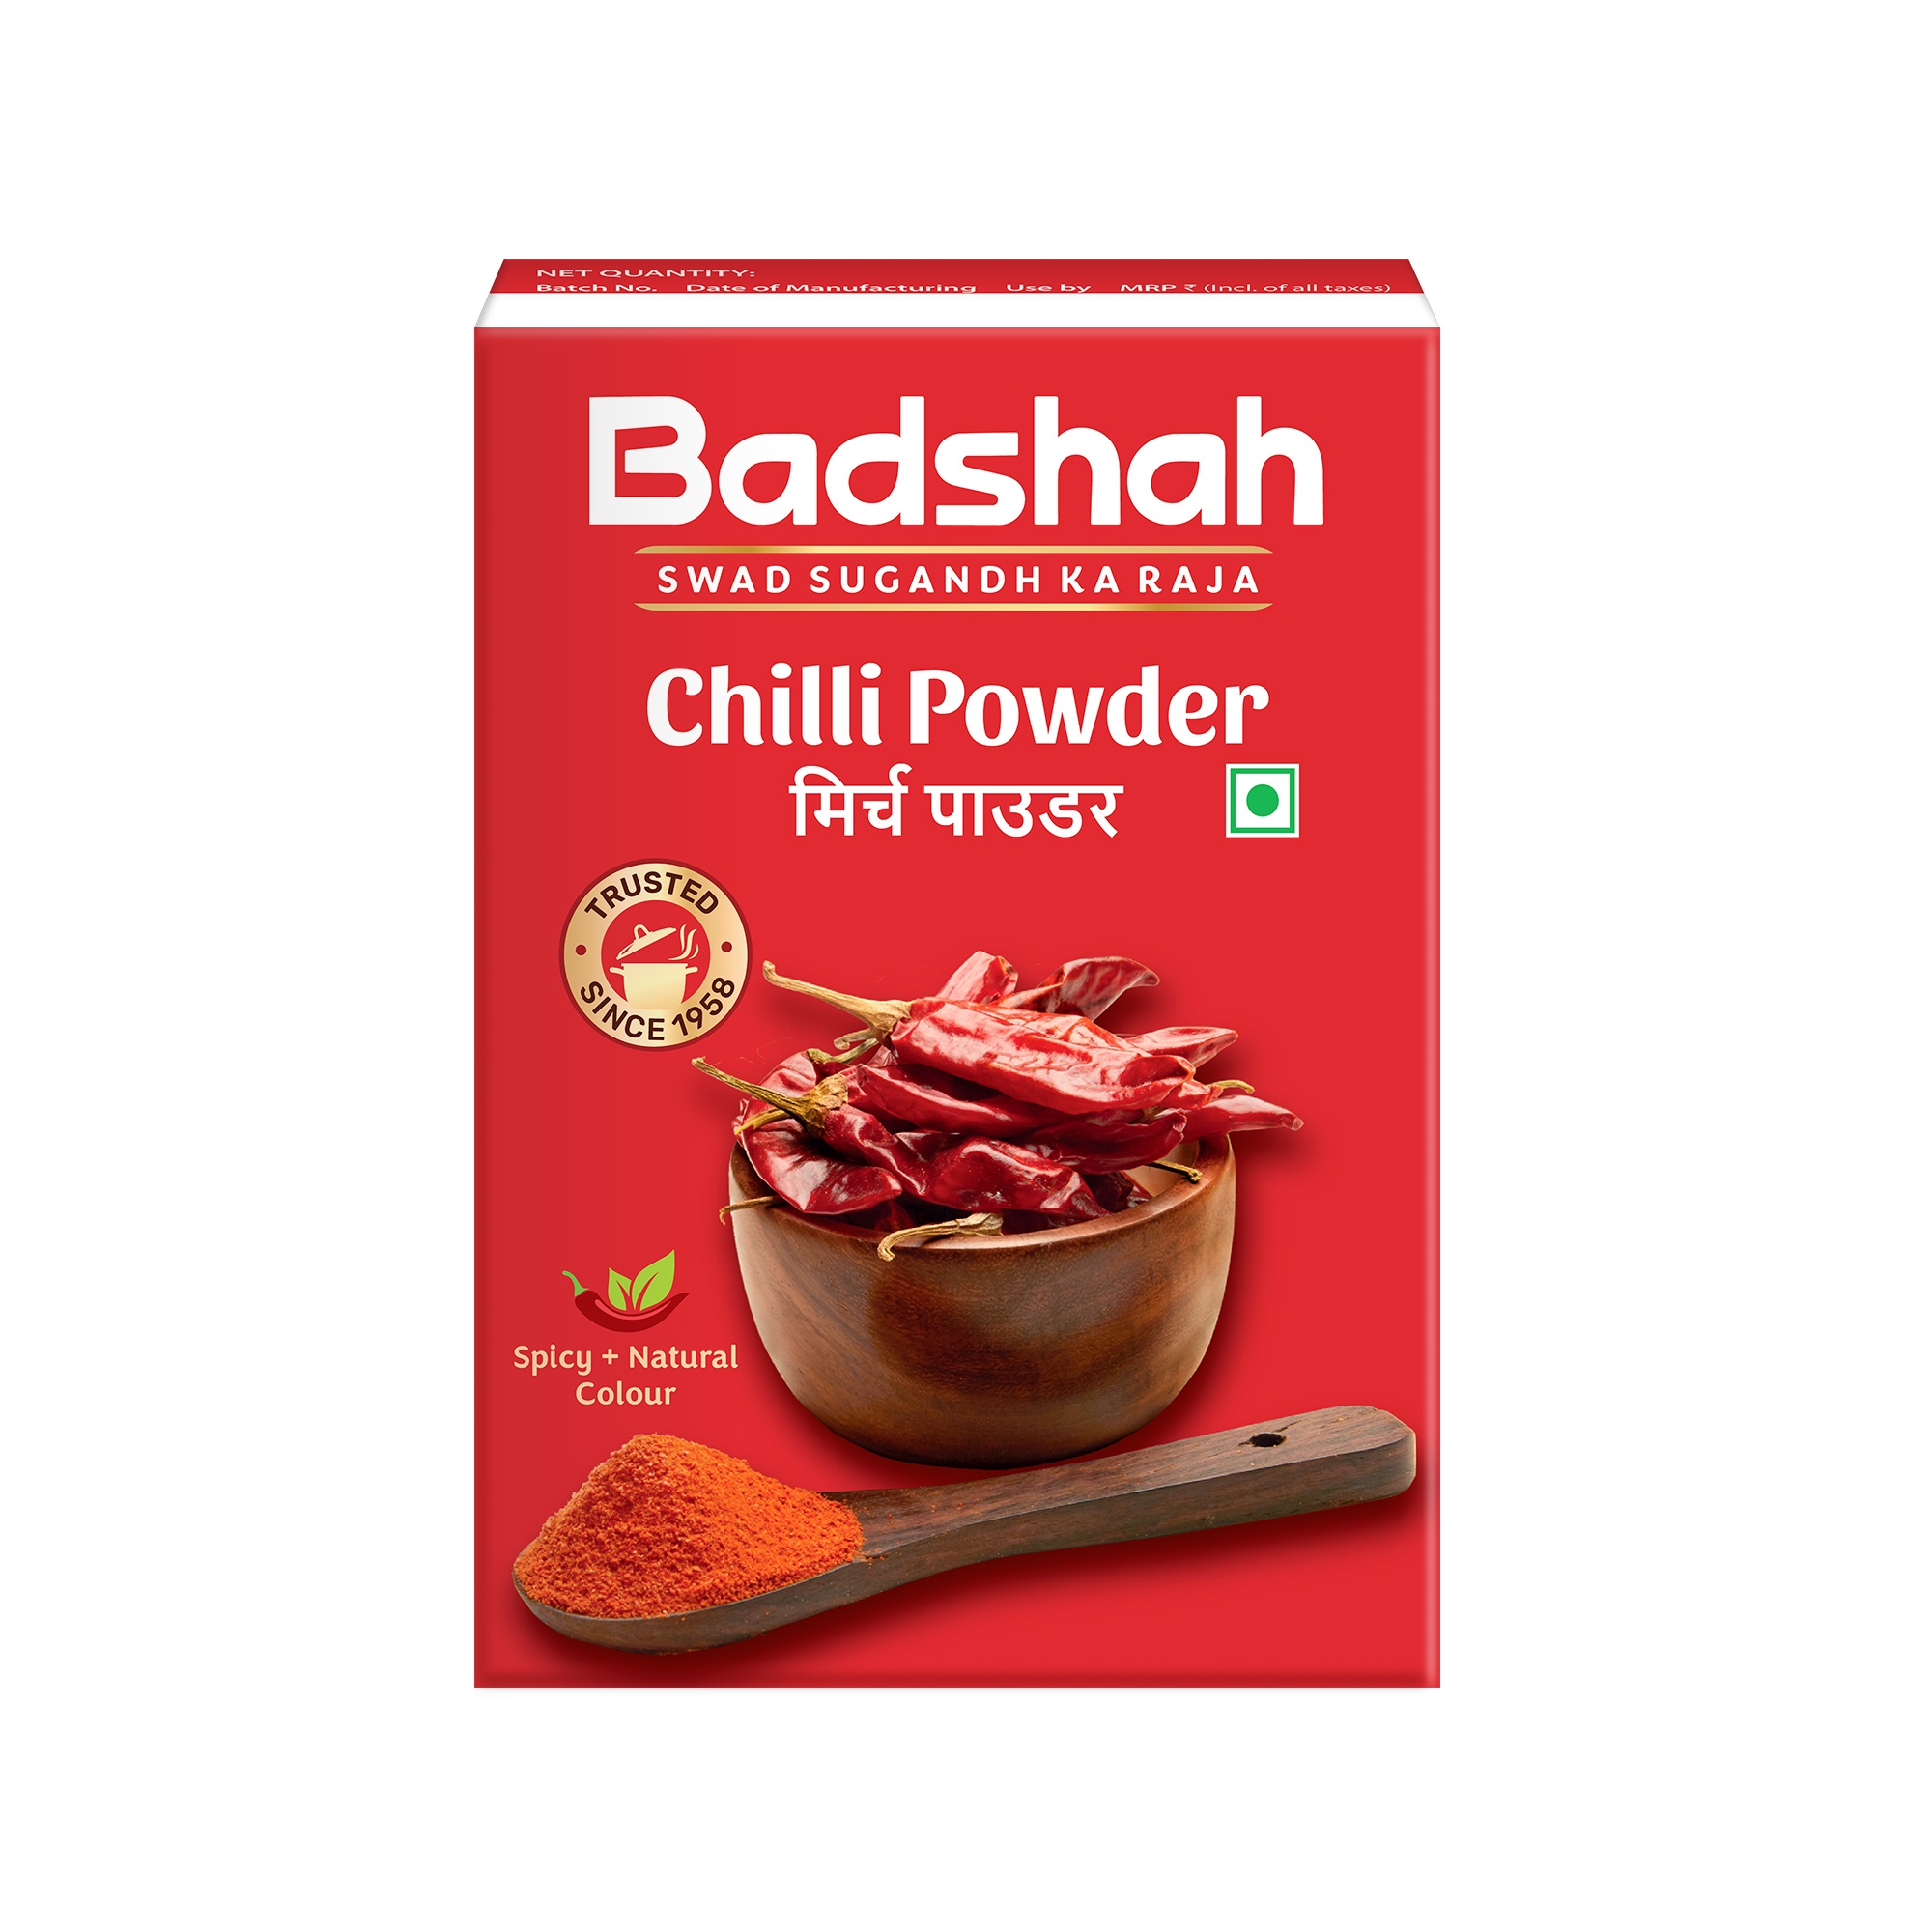 Badshah Chilli Powder |